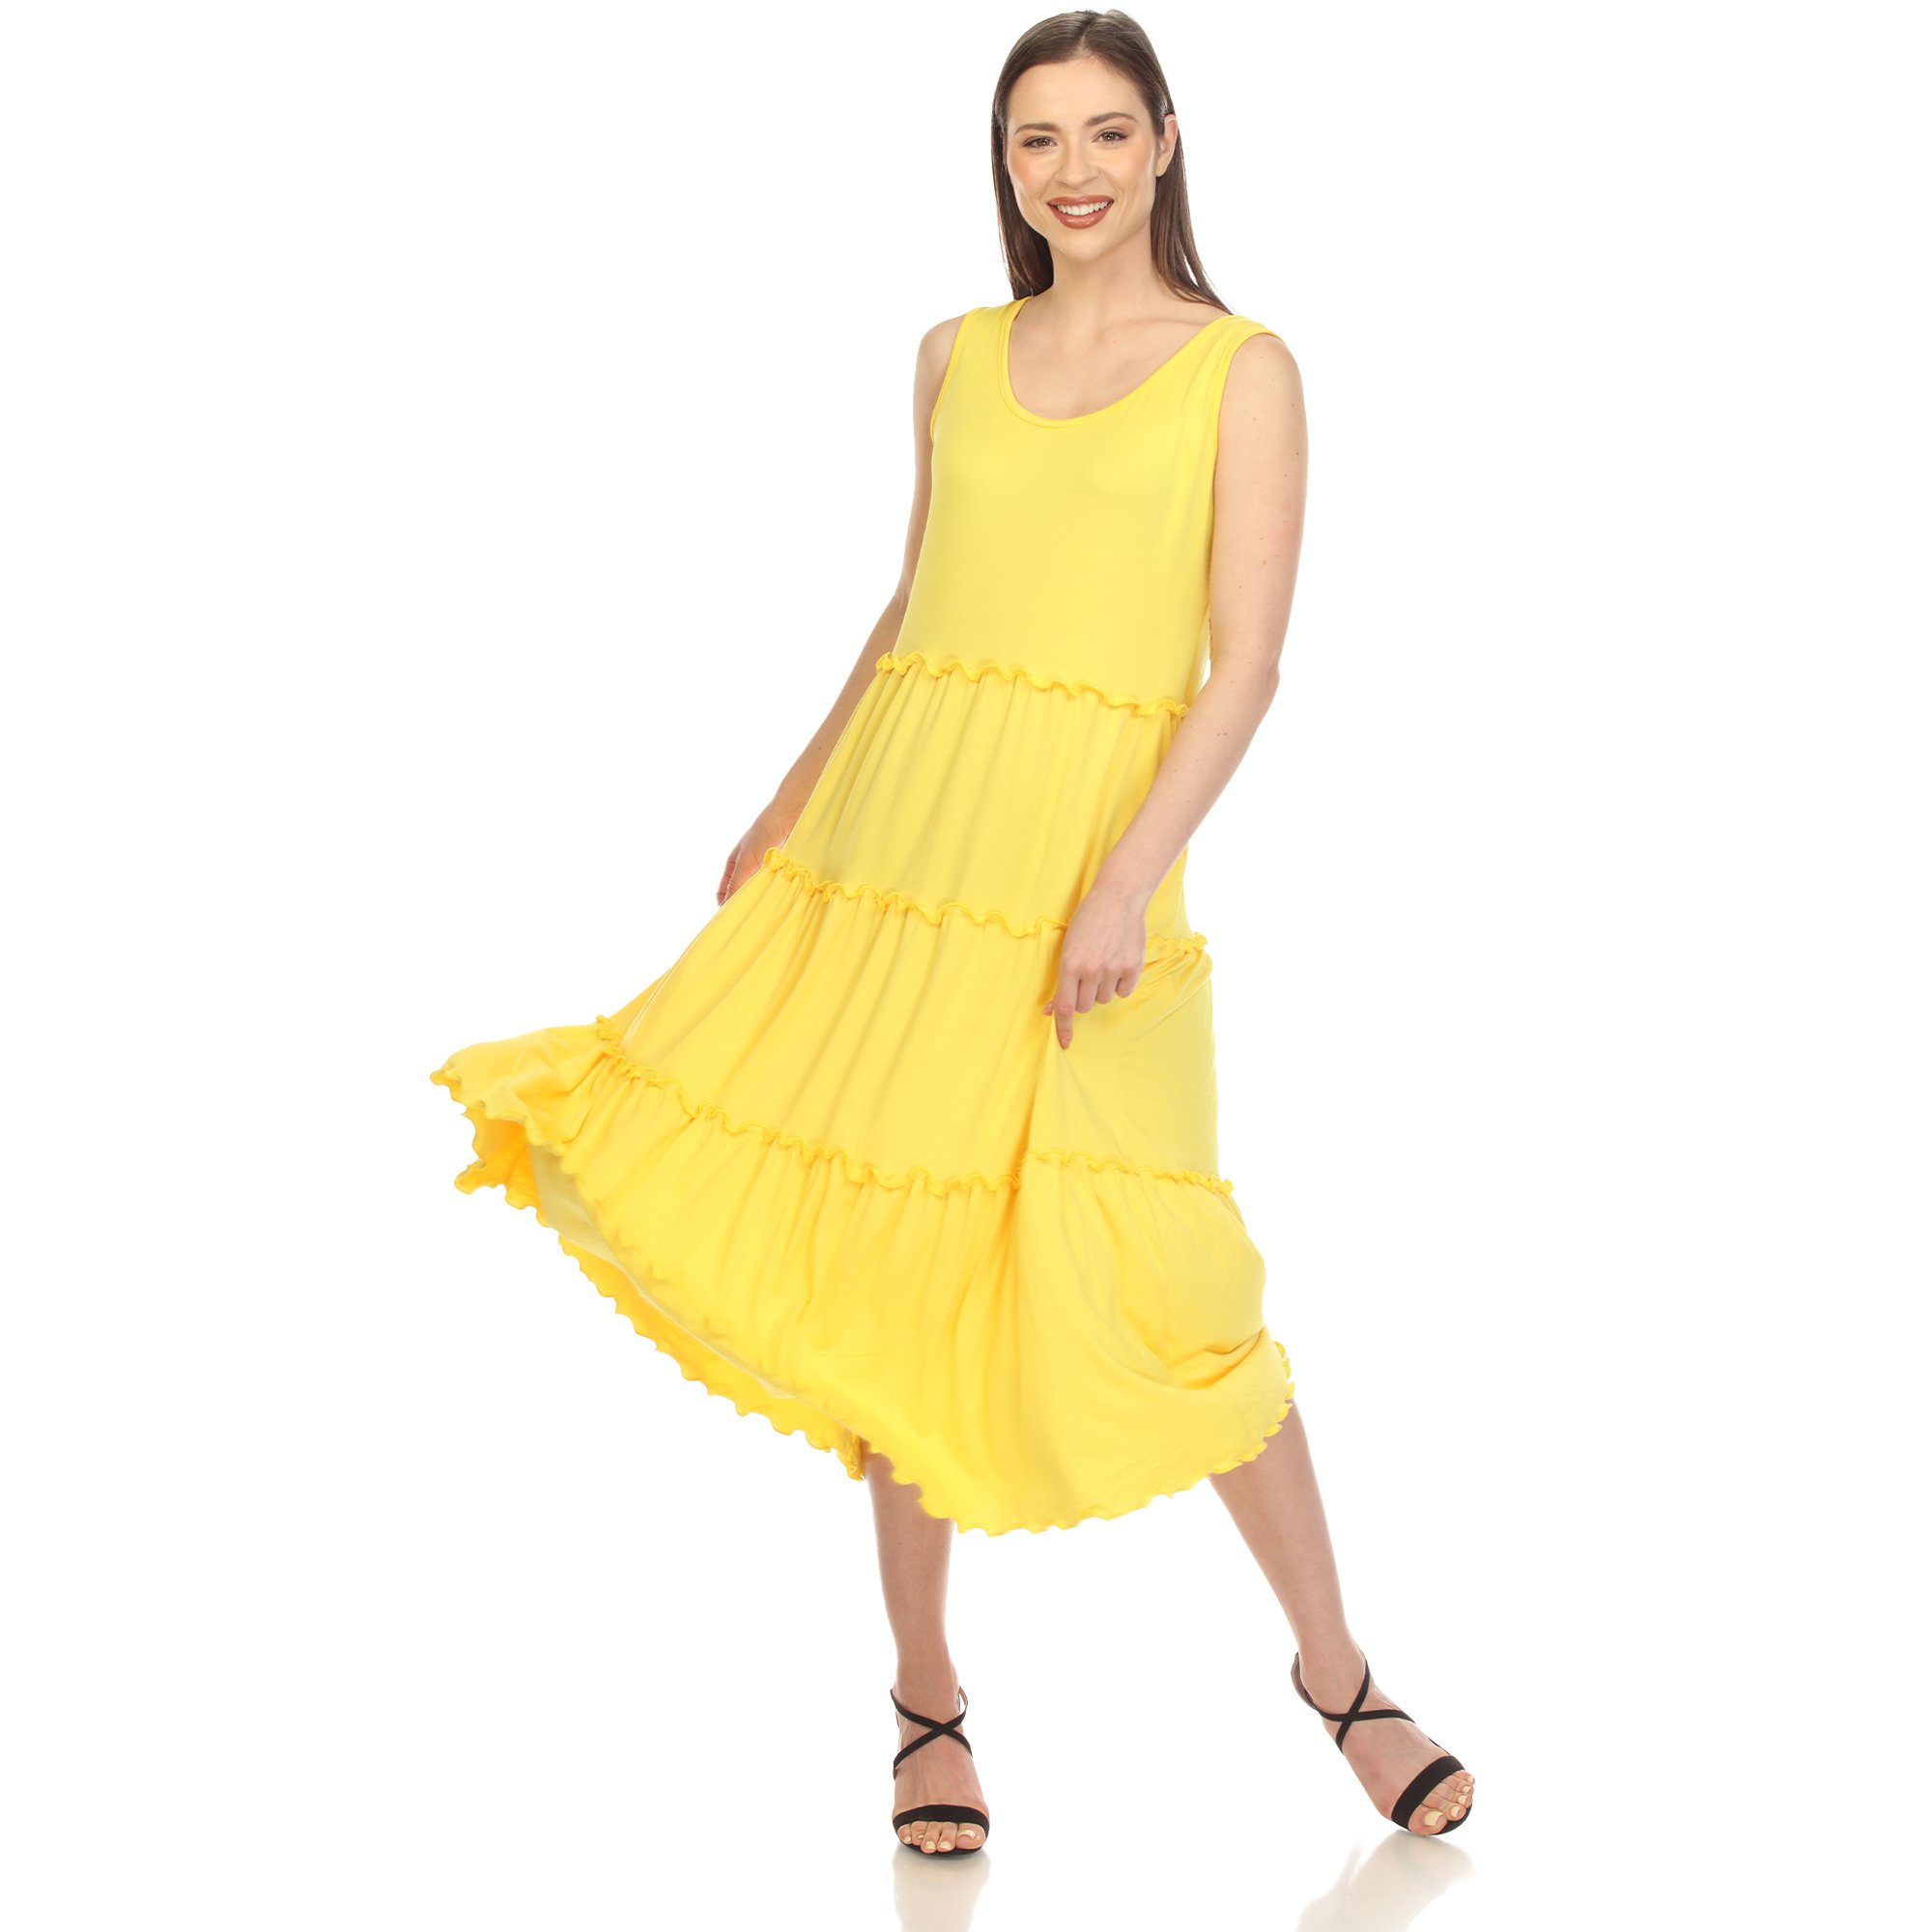 White Mark Women's Scoop Neck Tiered Midi Dress - Canary Yellow, 2X